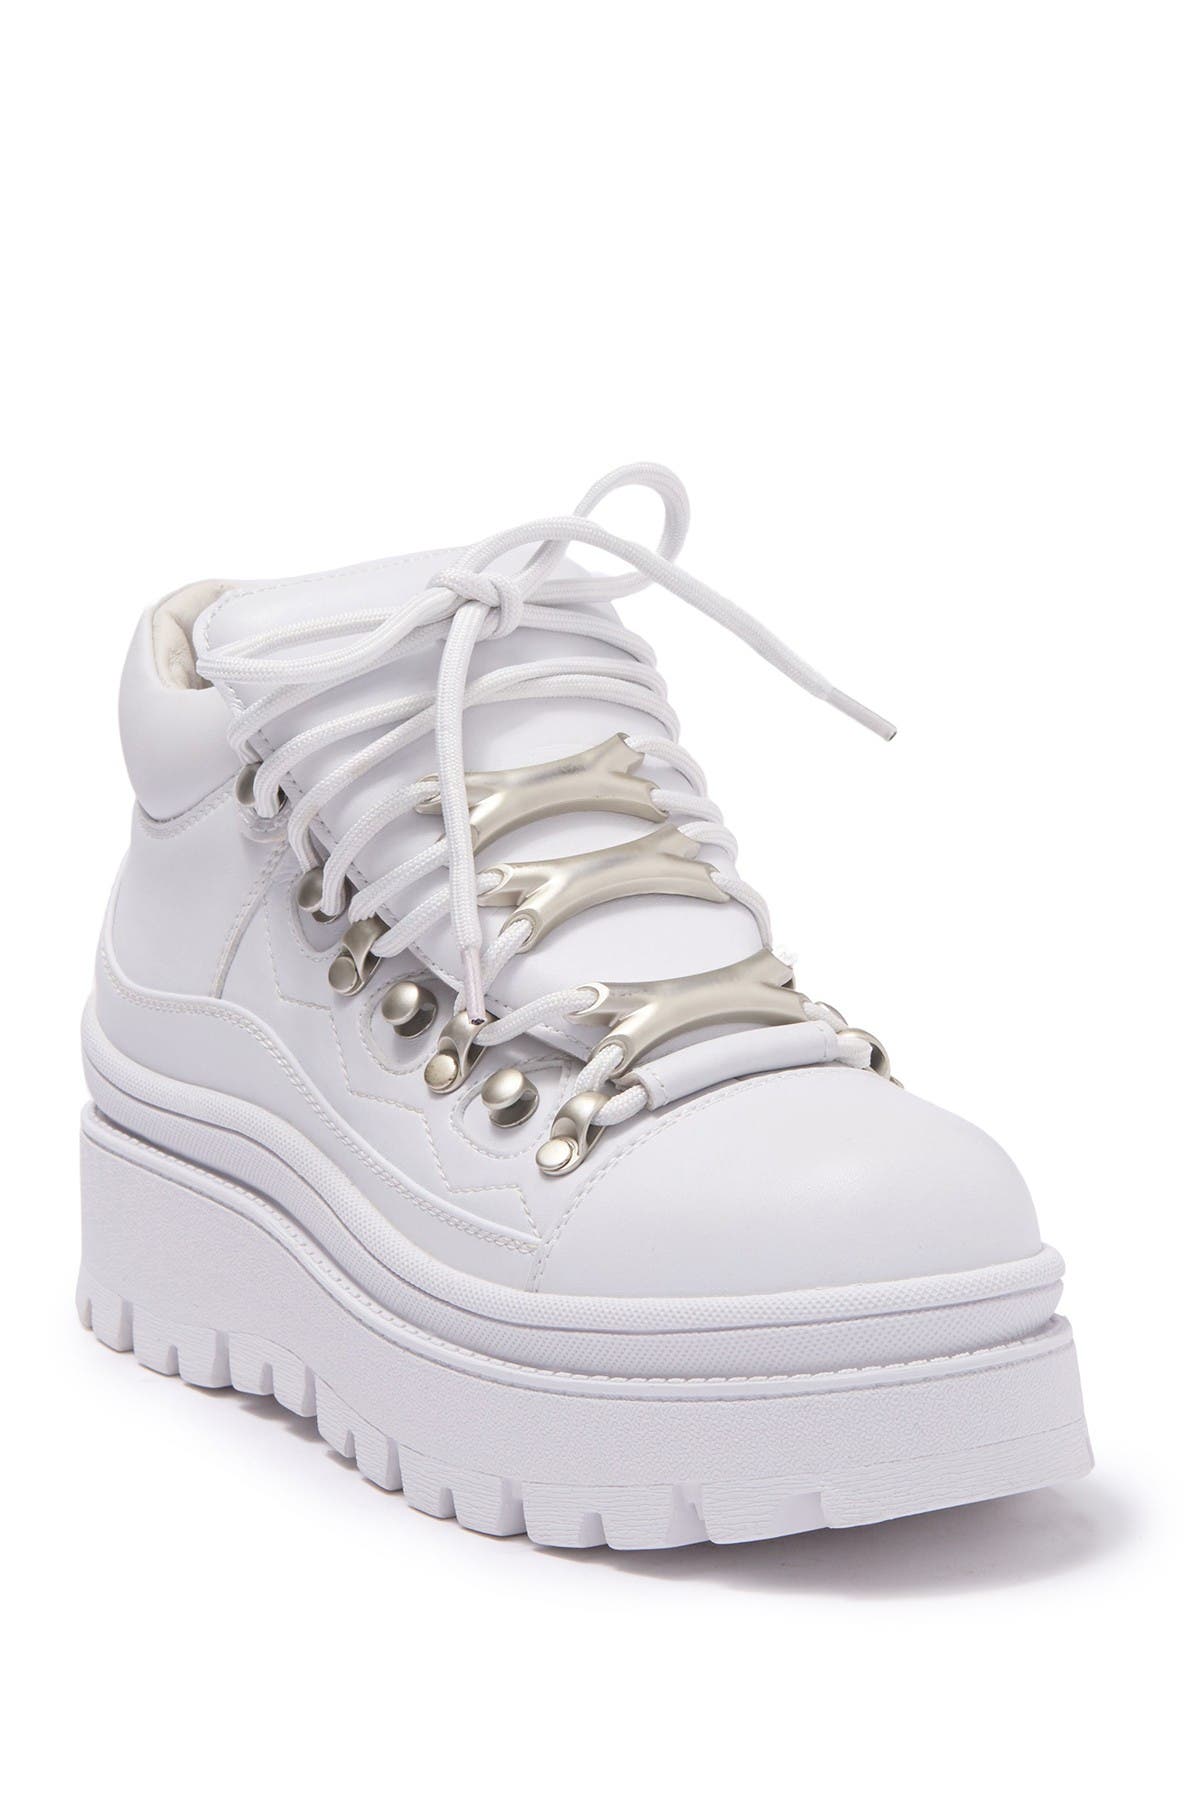 jeffrey campbell white platform sneakers